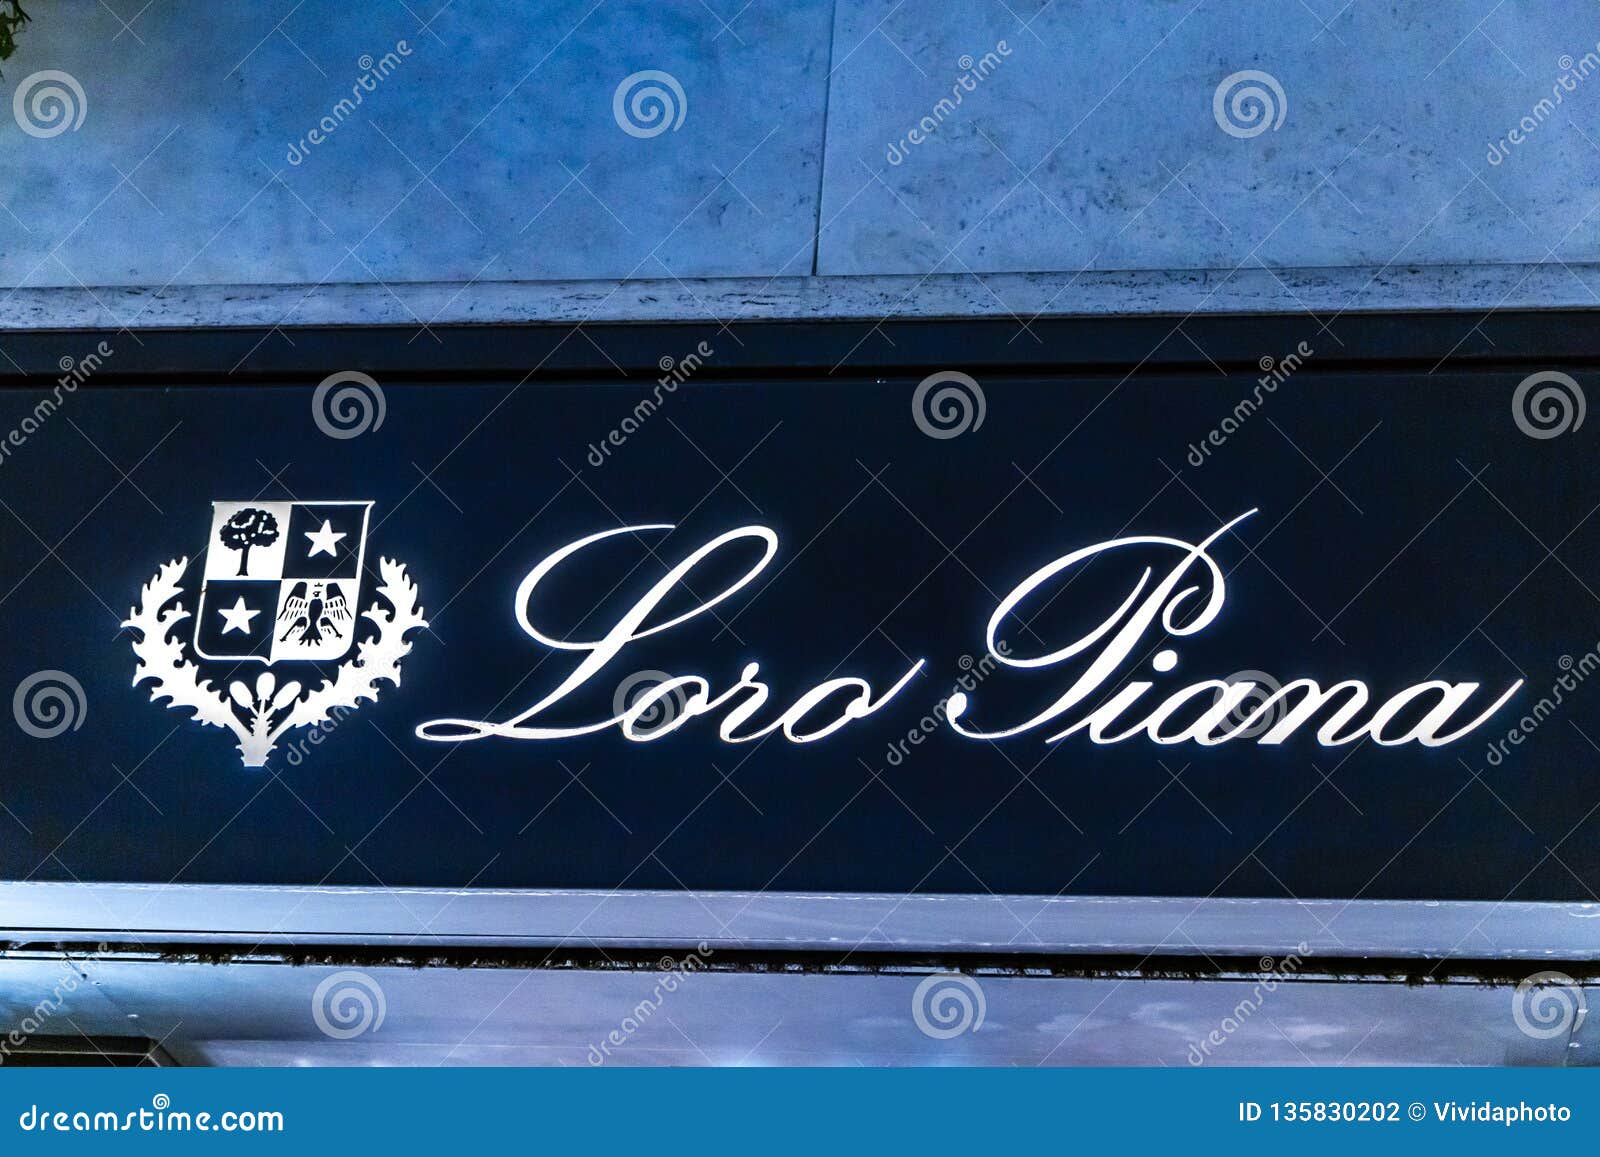 Loro Piana Clothing Brand Logo Editorial Image - Image of holded, brands:  120229910